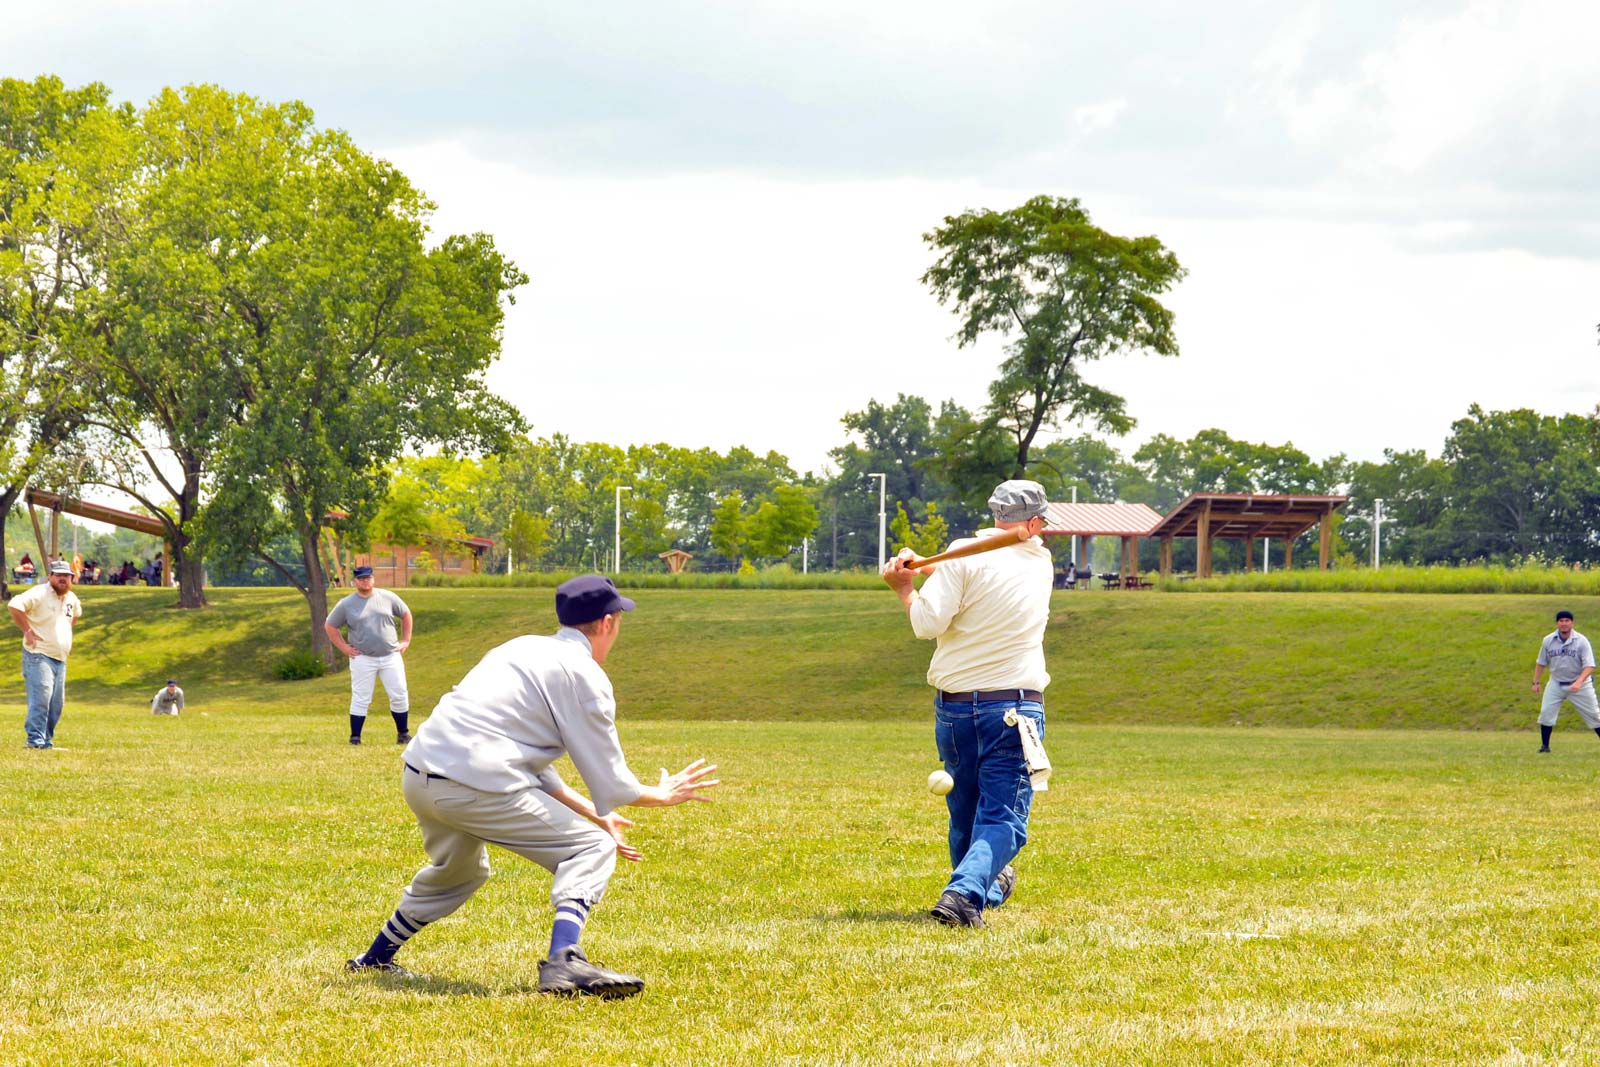 Baseball game, strike out, in the picnic area at Scioto Audubon Metro Park.